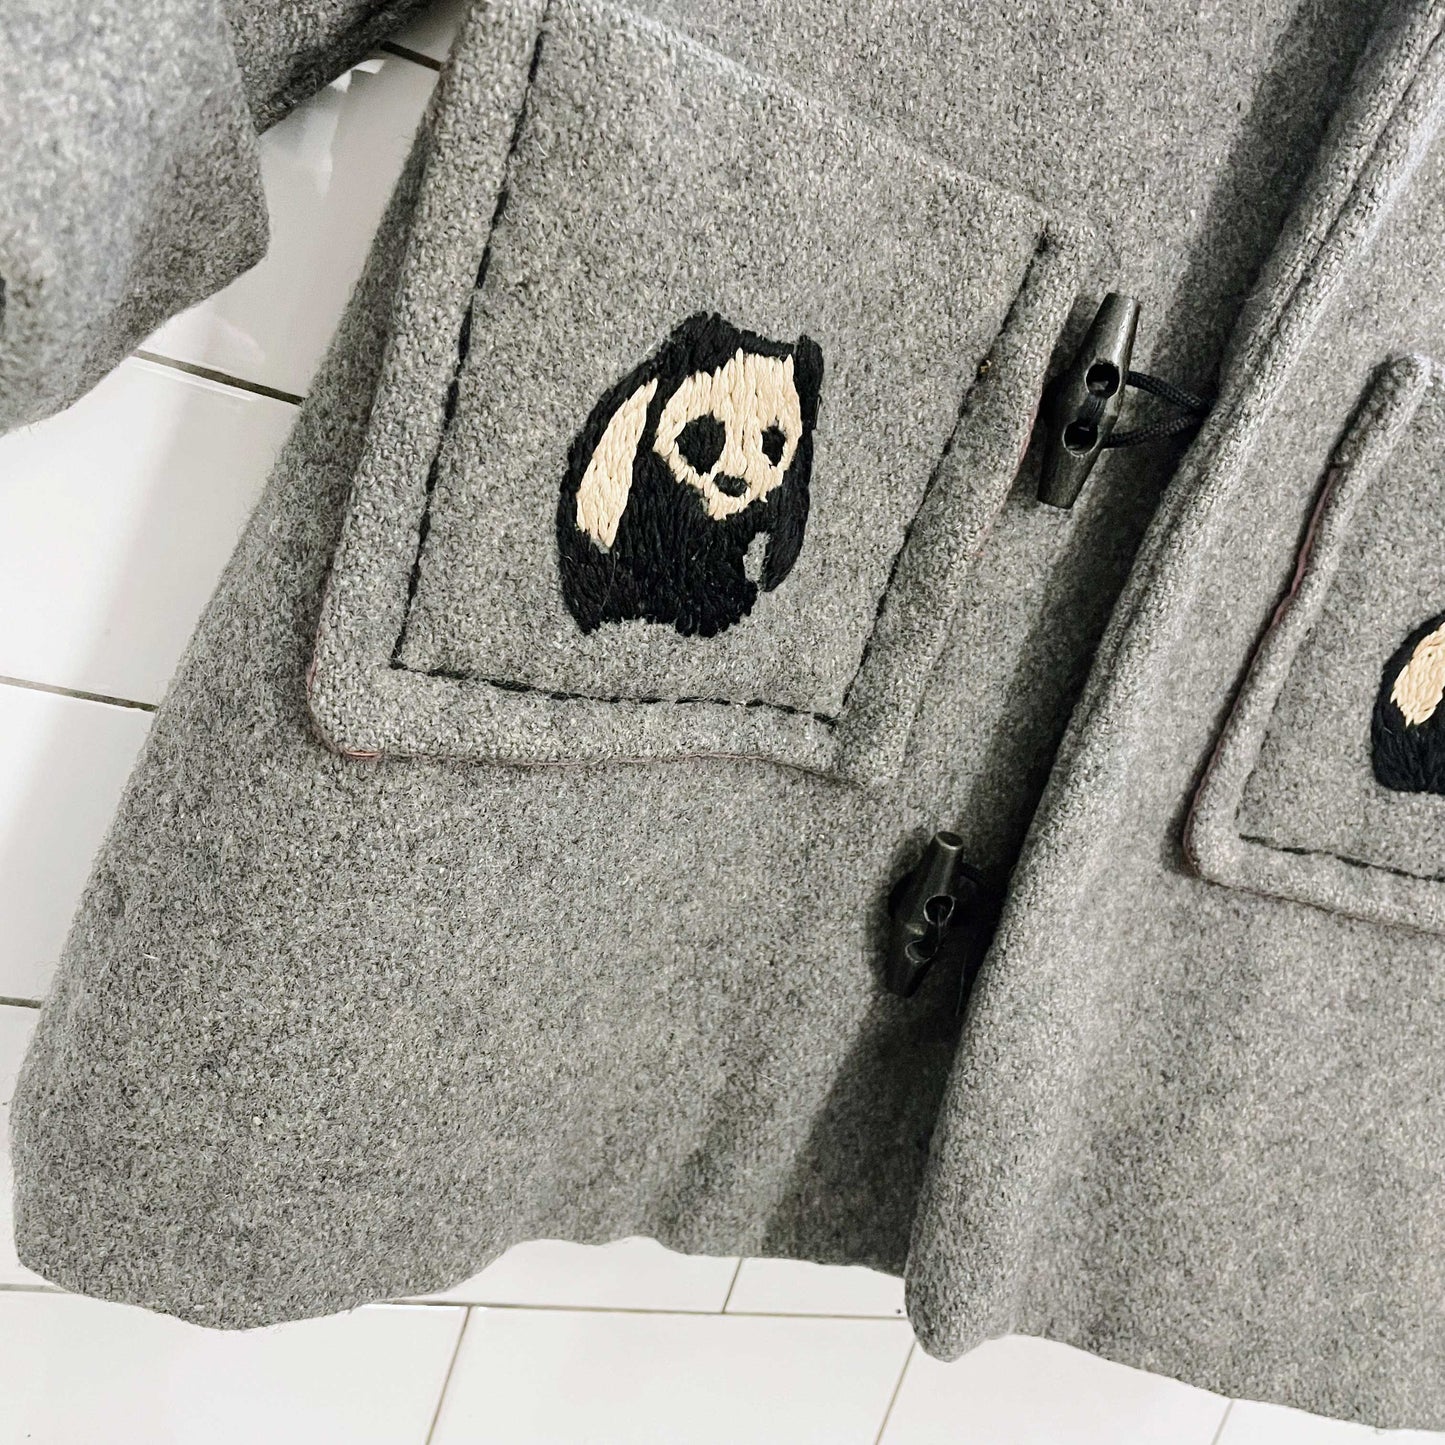 vintage handmade panda bear wool toggle coat - size 5